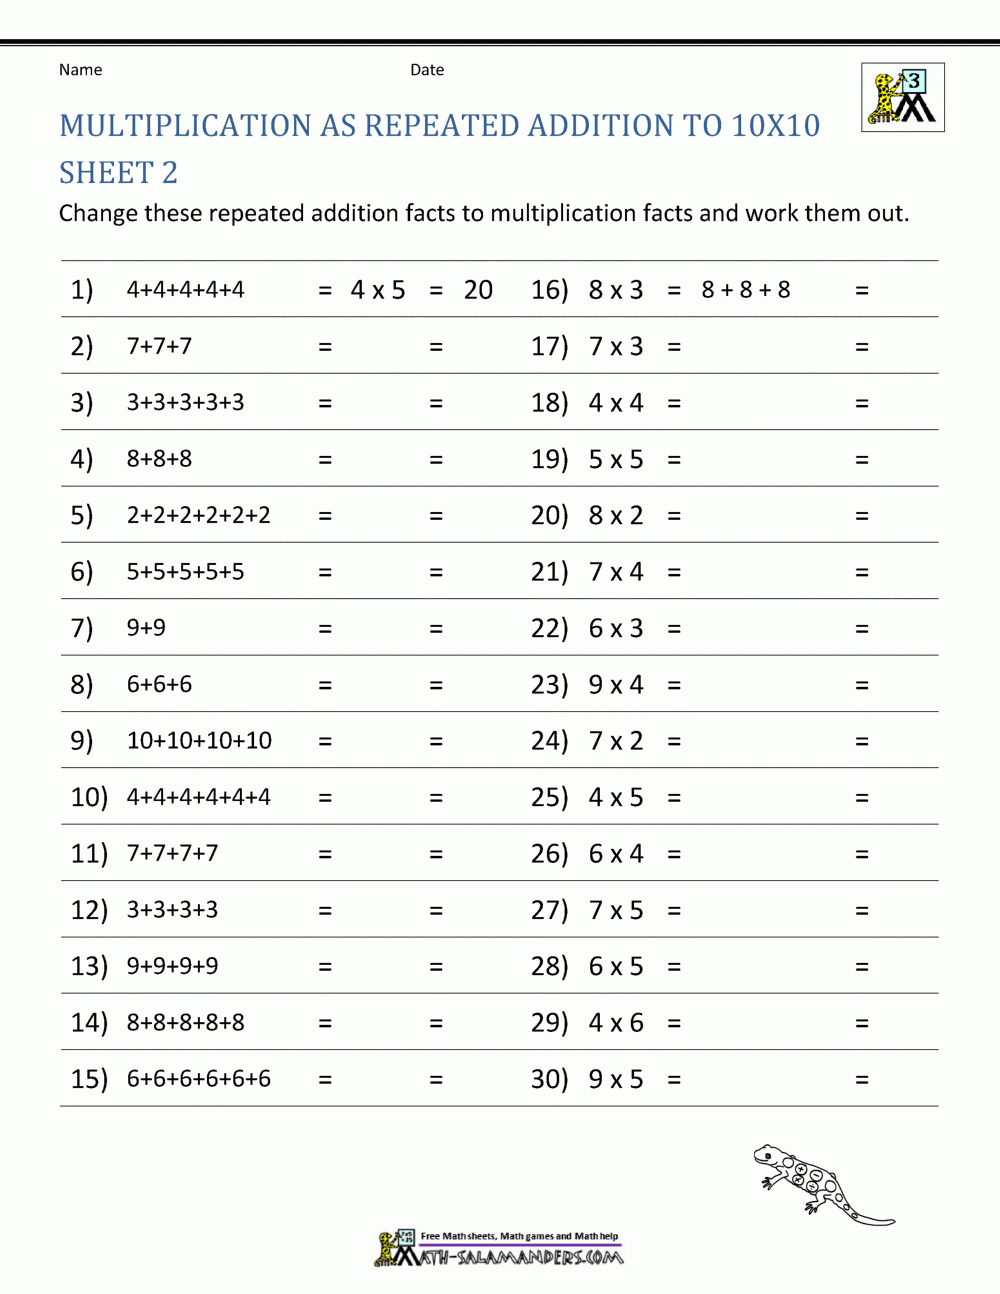 Multiplication Facts Worksheets - Understanding regarding Multiplication Worksheets Year 3 Free